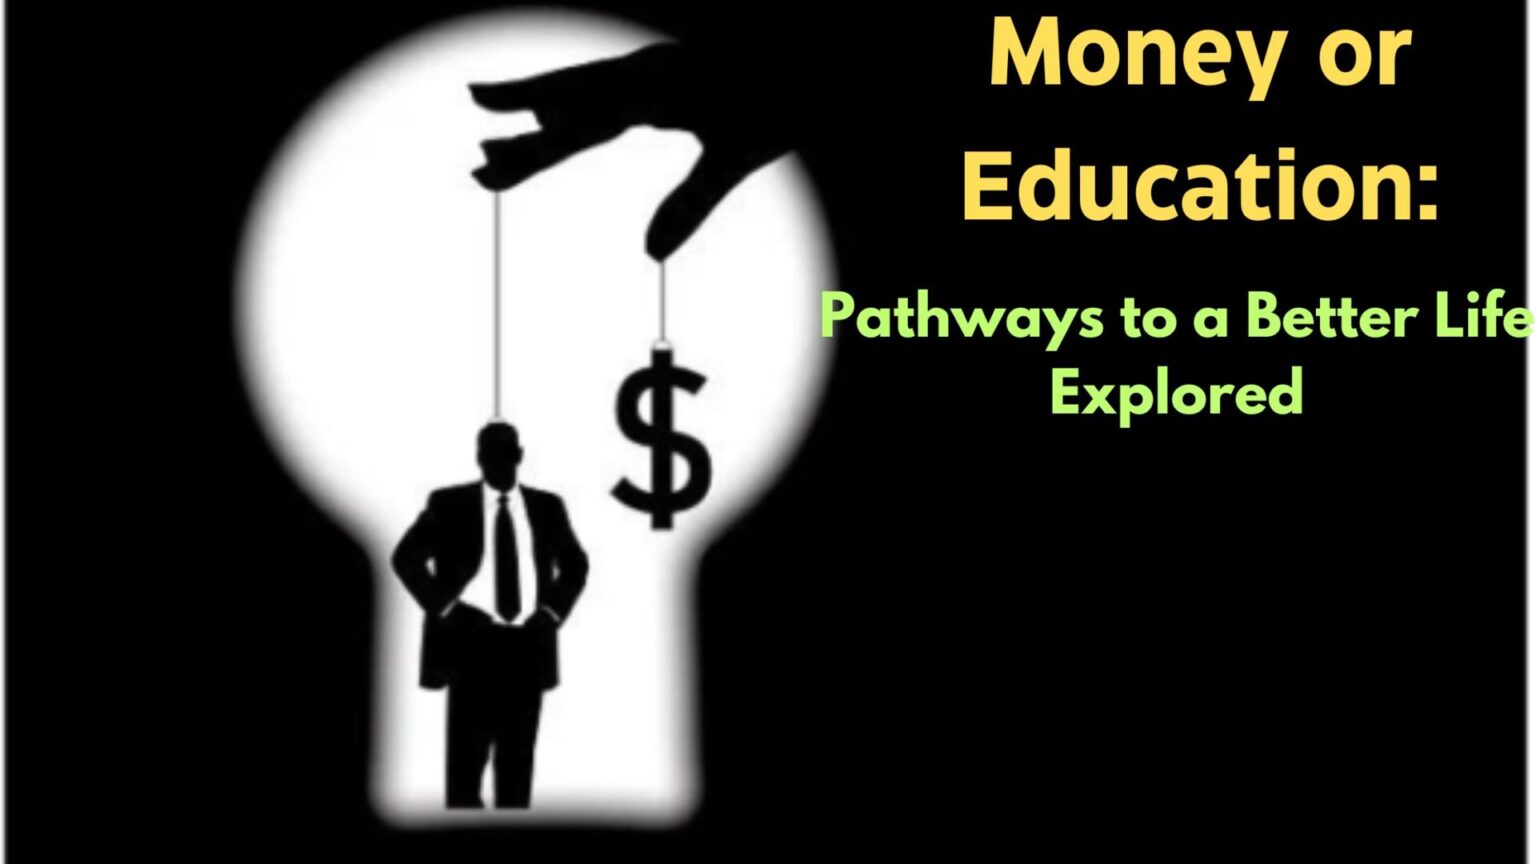 Money or Education: Better Life Explored